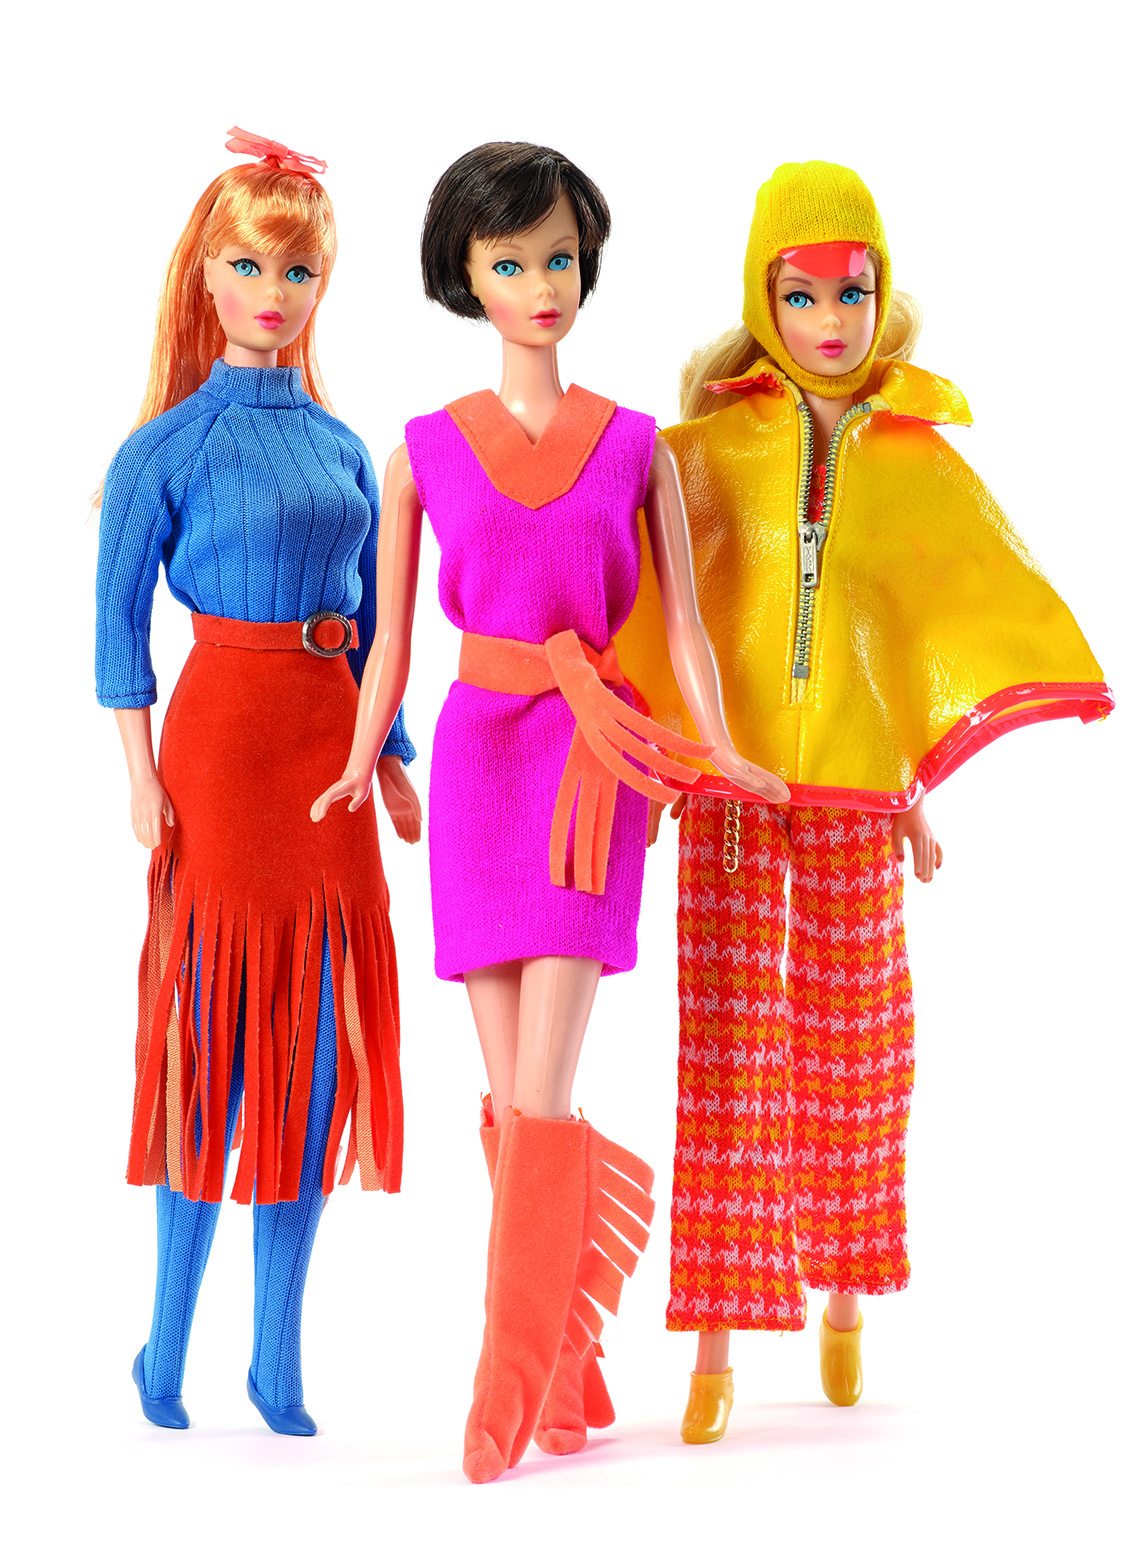 Meet the Fashion Designer Responsible for “Dressing Barbie”